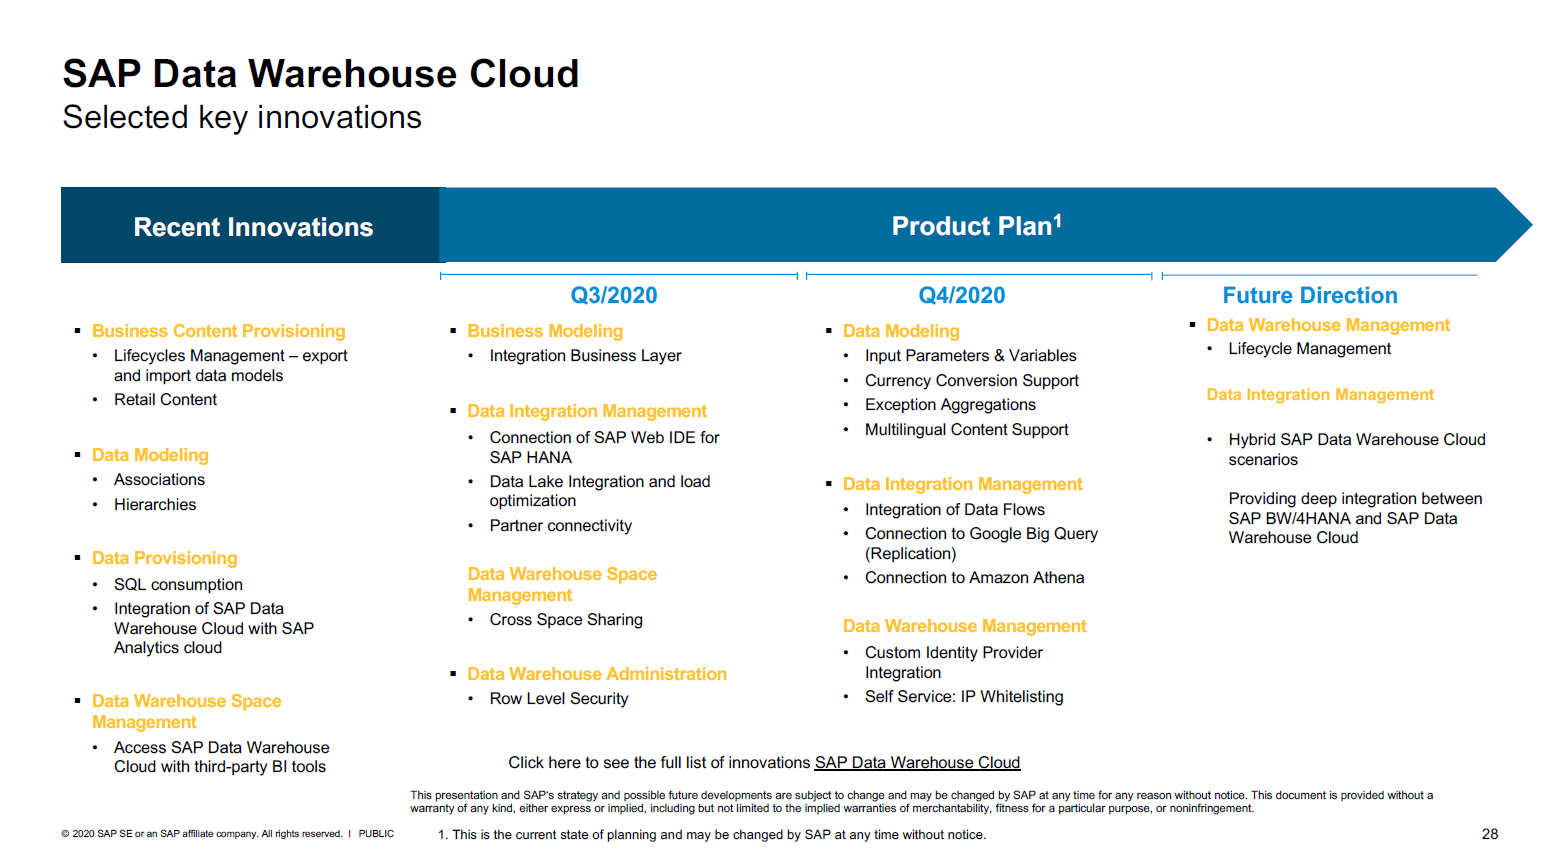 SAP Data Warehouse Cloud Roadmap